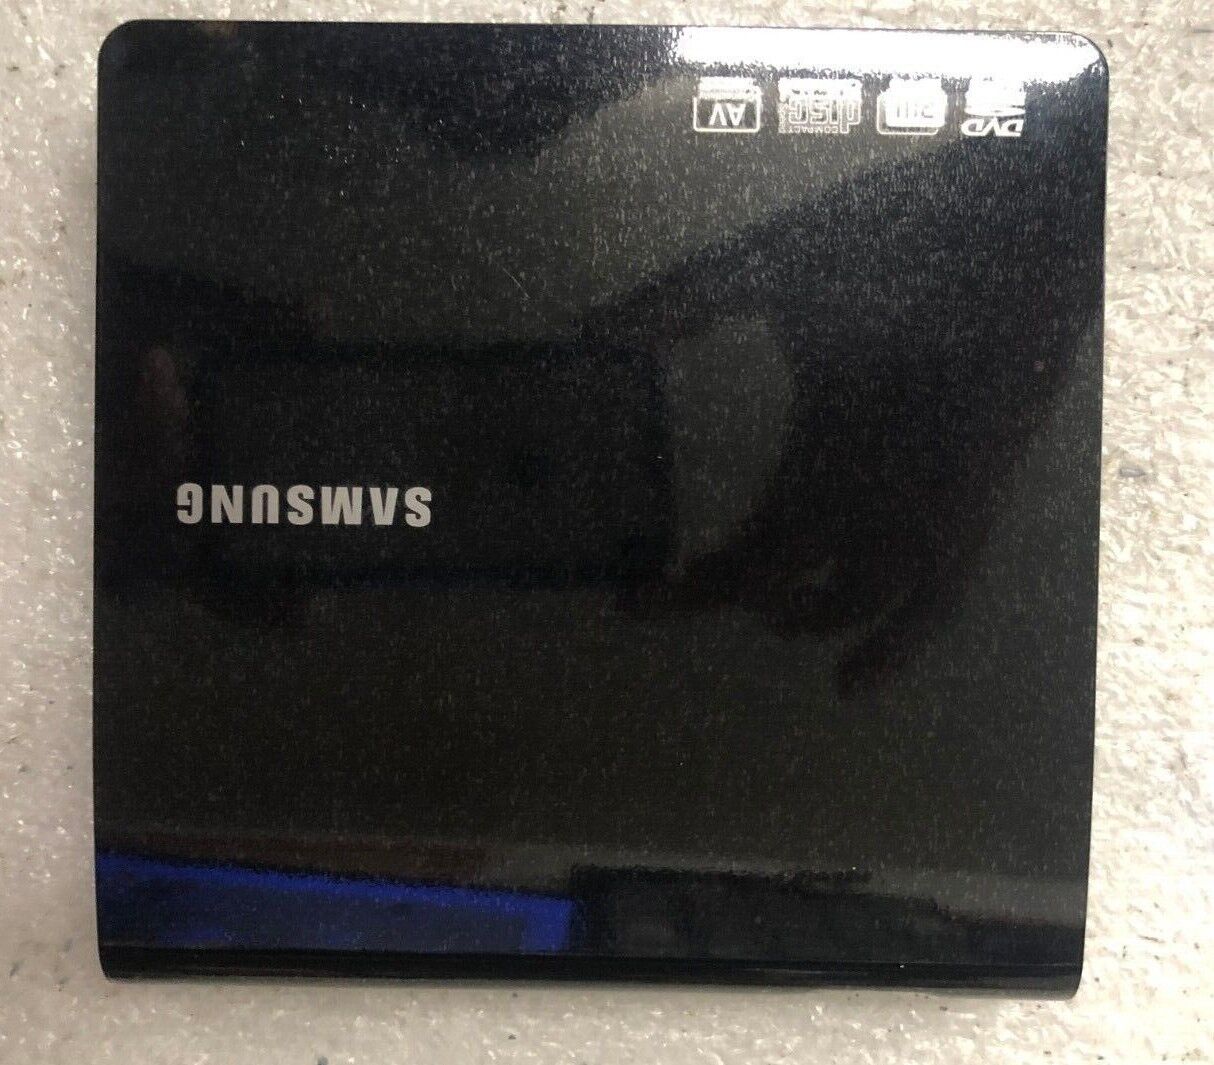 Samsung SE-208DB/TSBS SE-208 Slim Portable USB External DVD Writer